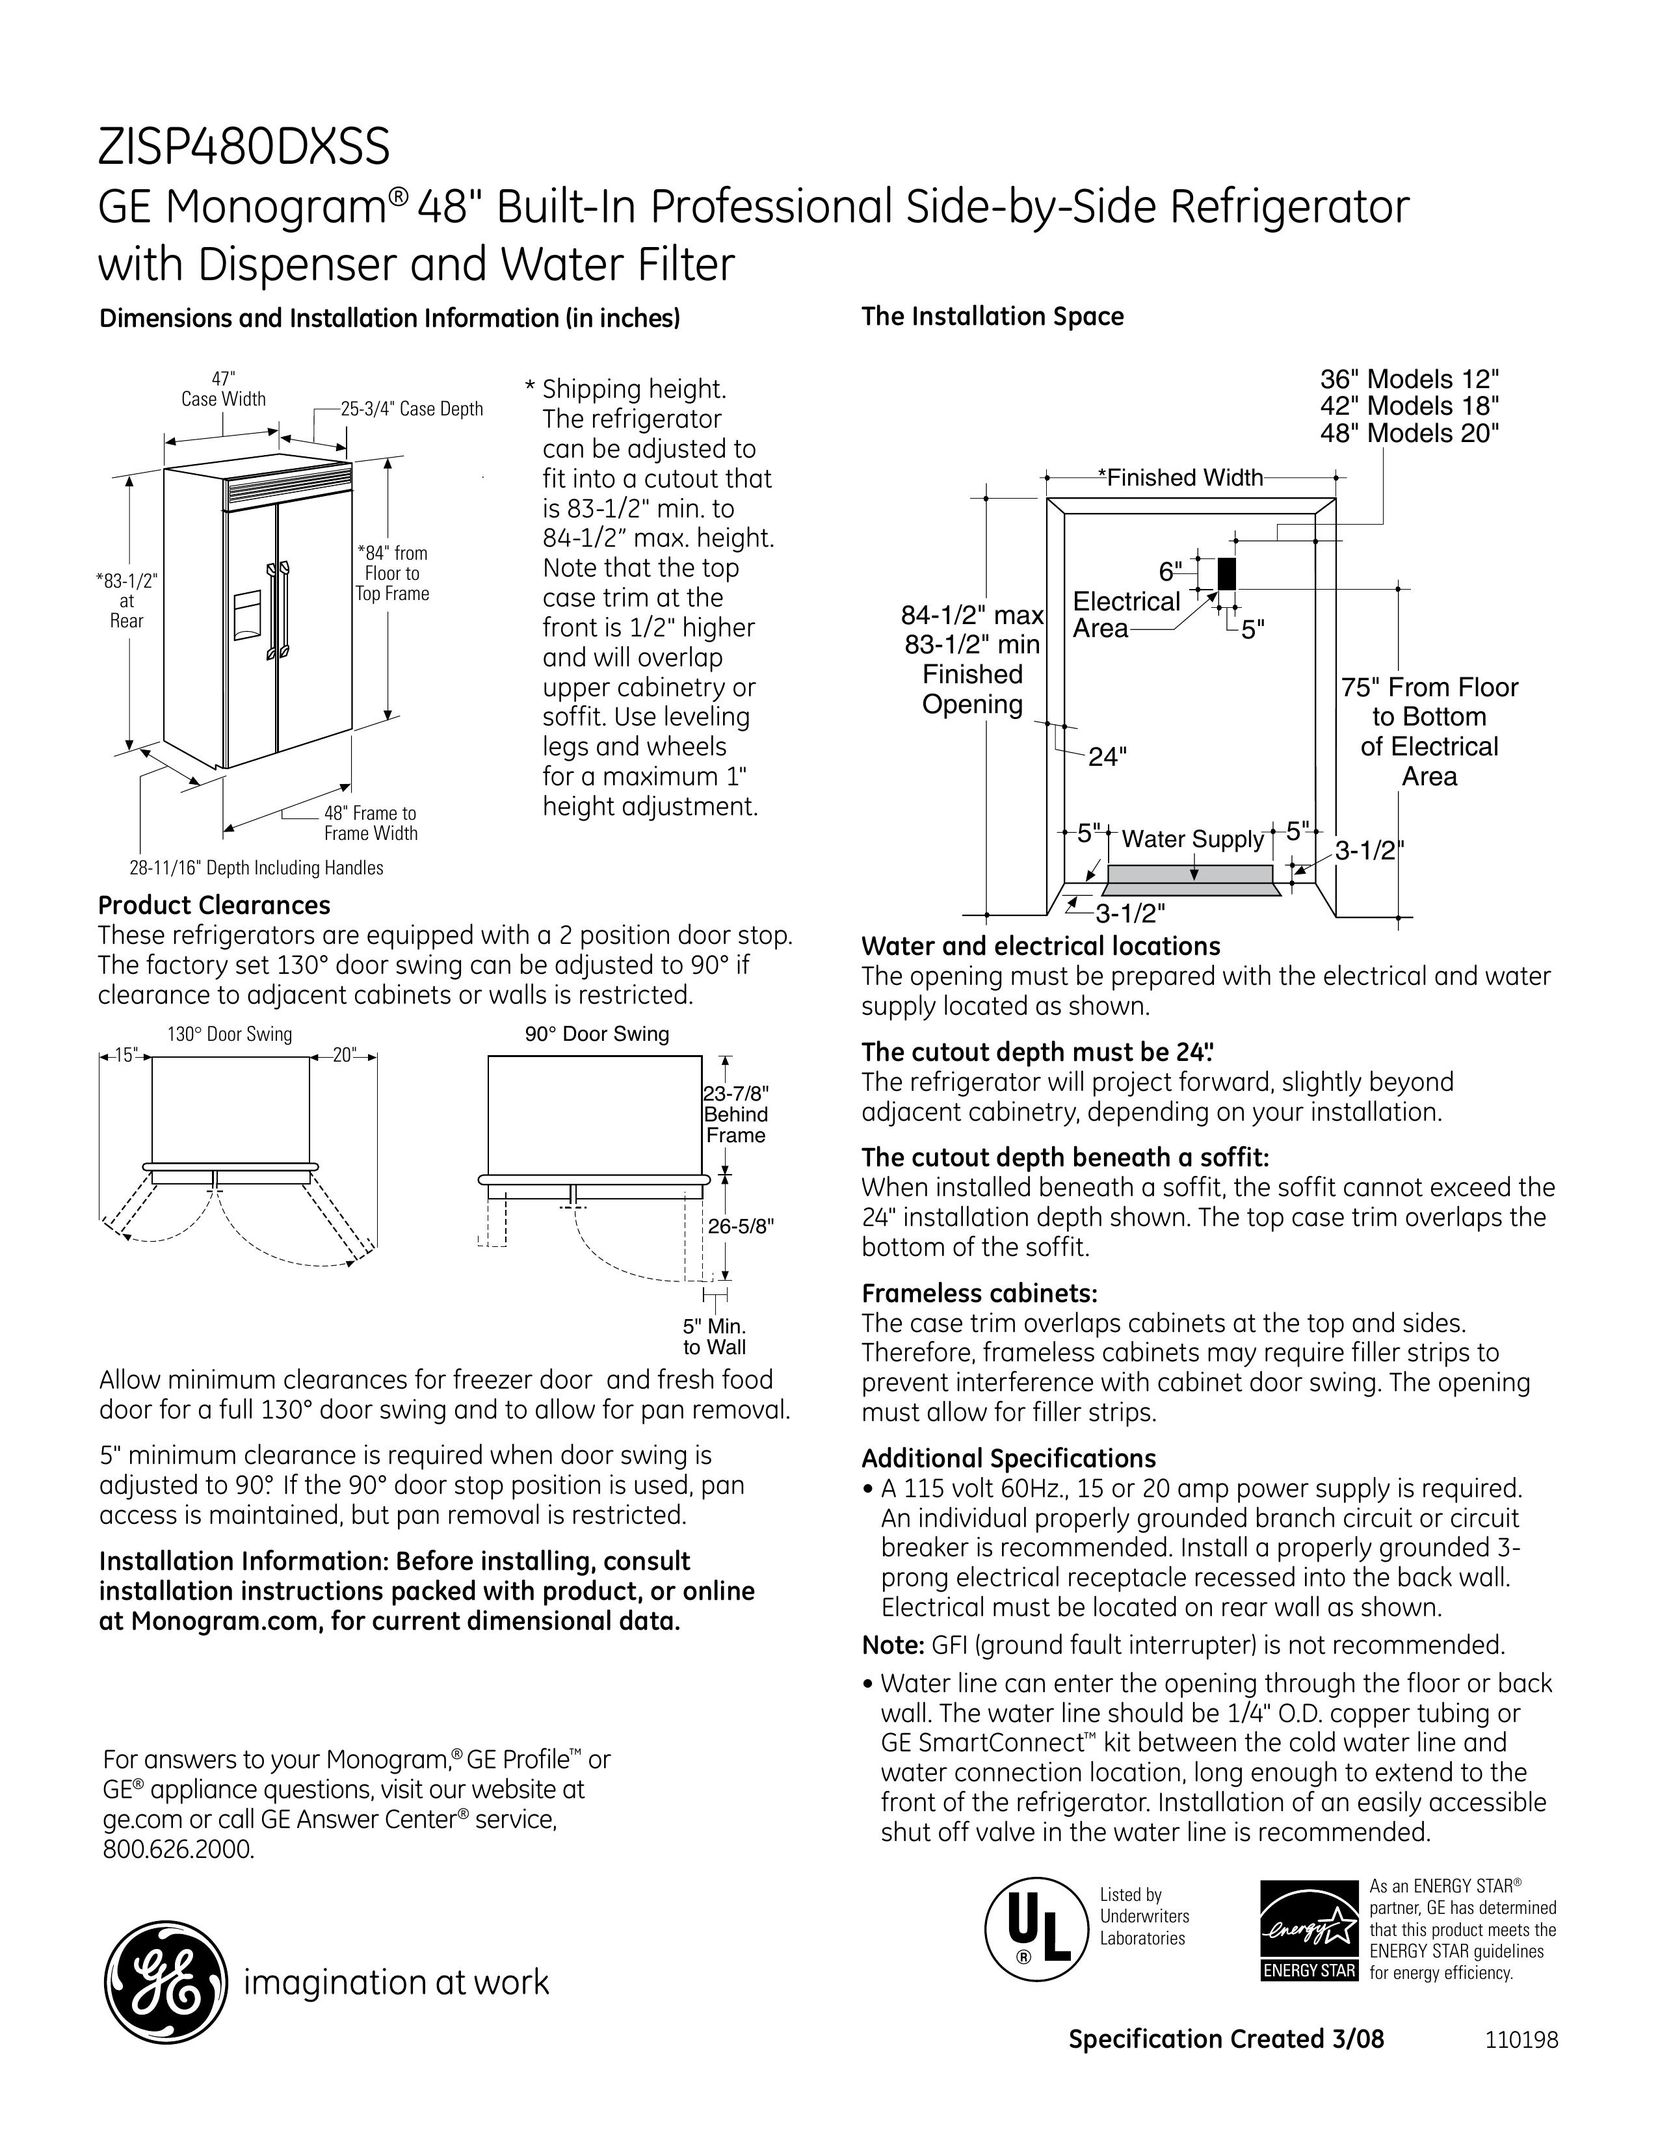 GE ZISP480DXSS Flat Panel Television User Manual